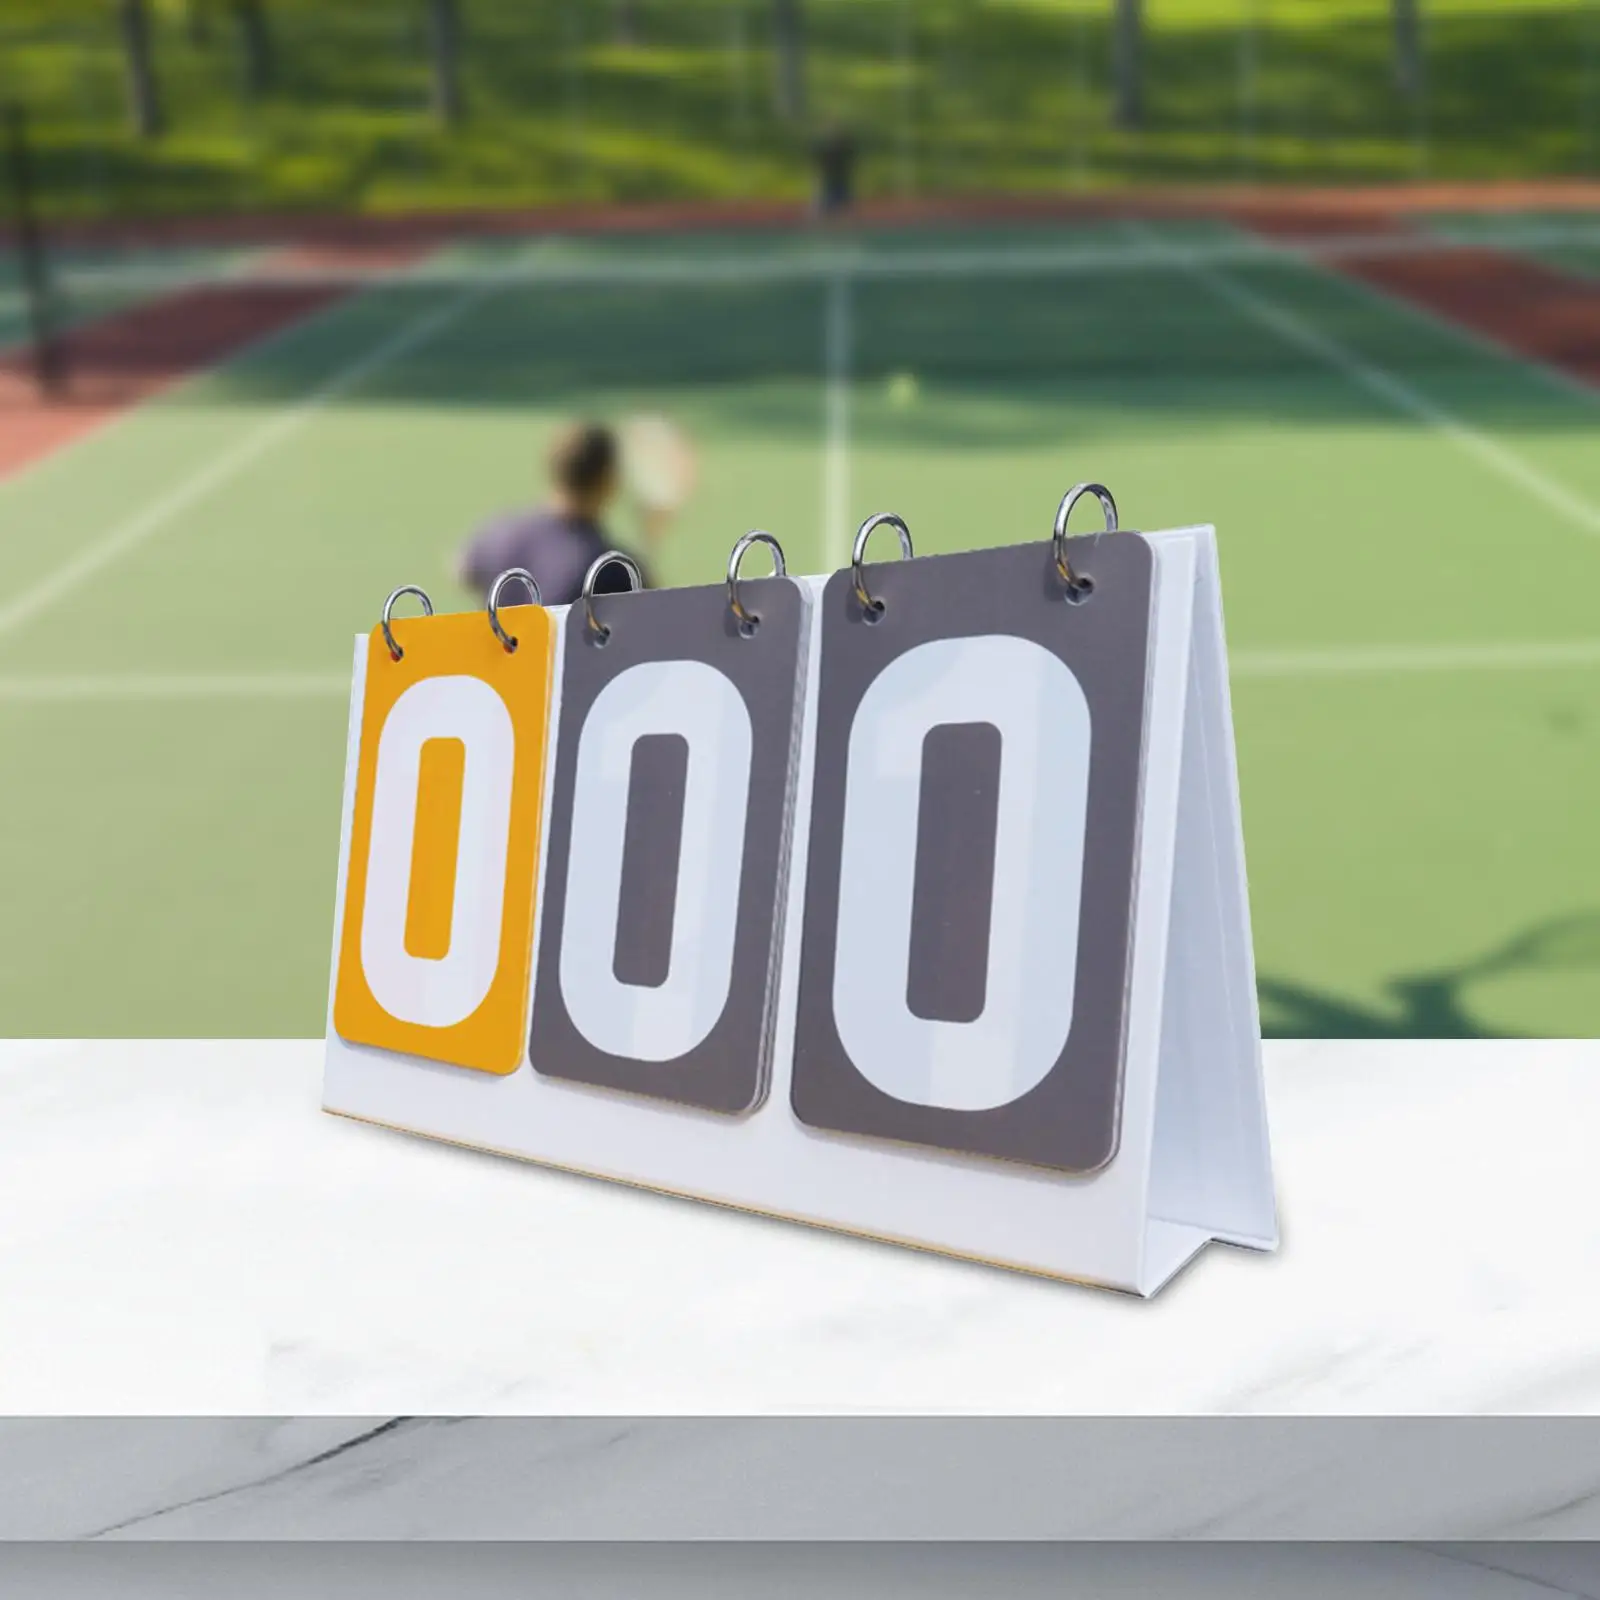 Score Board for Badminton Portable Tabletop Sports Flipper Games Sports